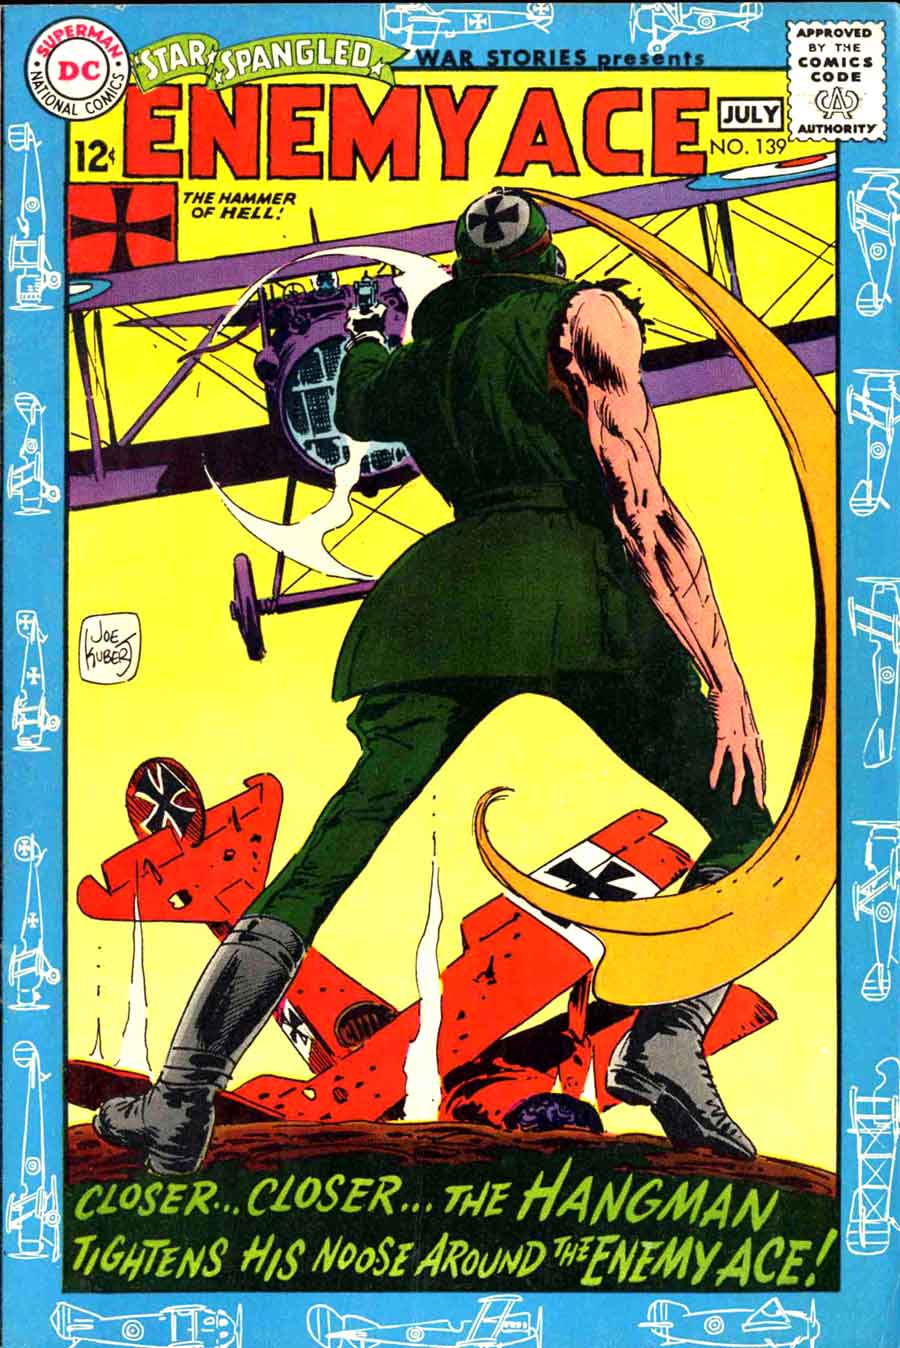 Star Spangled War v1 #139 enemy ace dc comic book cover art by Joe Kubert